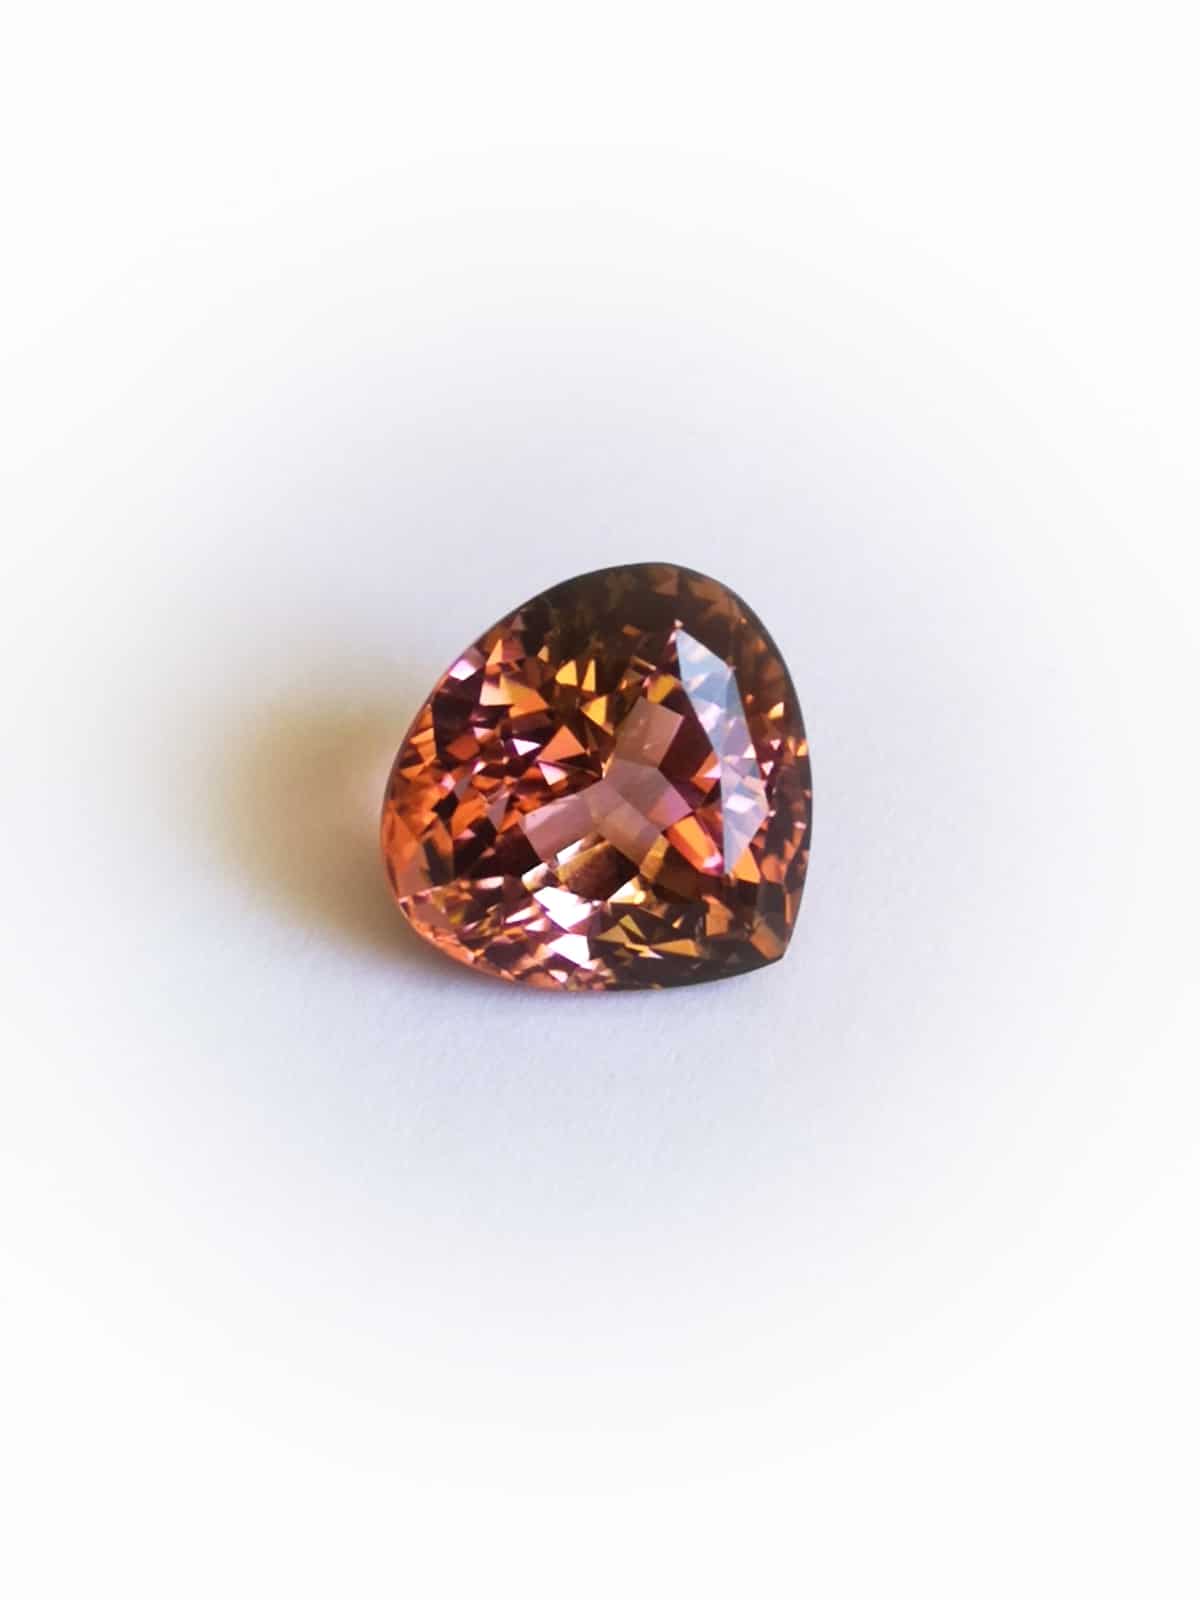 15.50-carat pink tourmaline